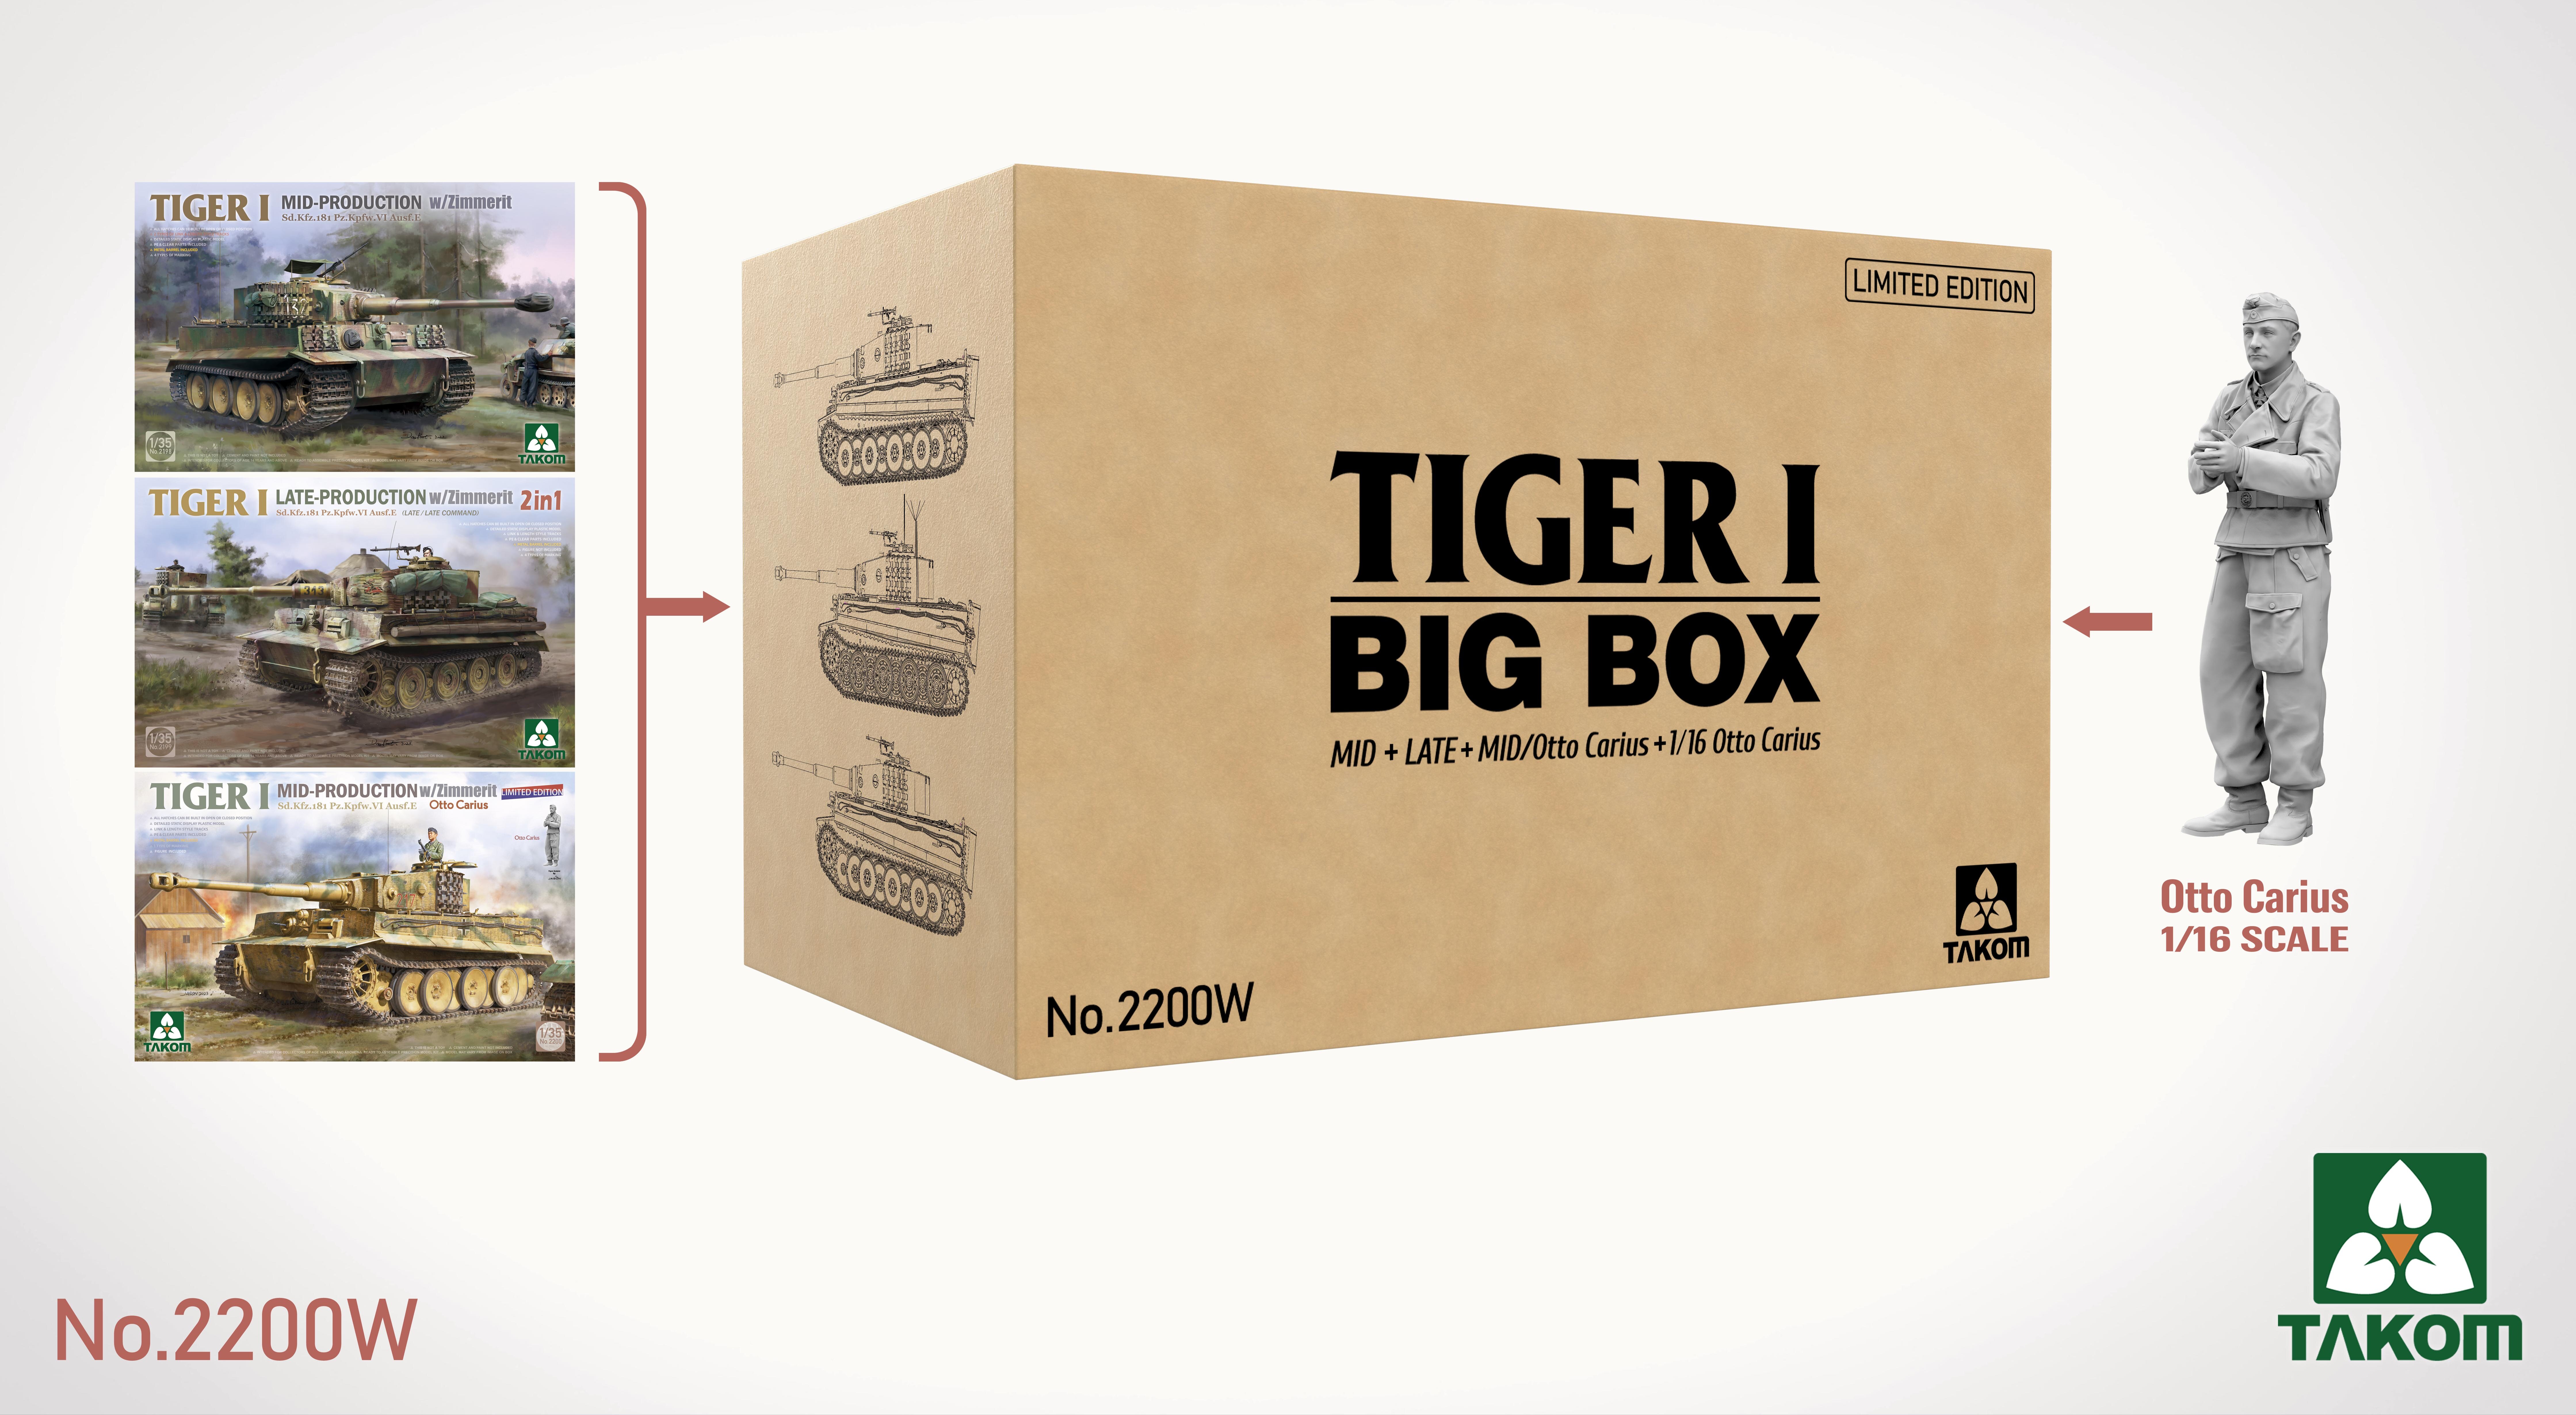 TIGER I BIG BOX 3 kits & 1:16 Otto Carius figure